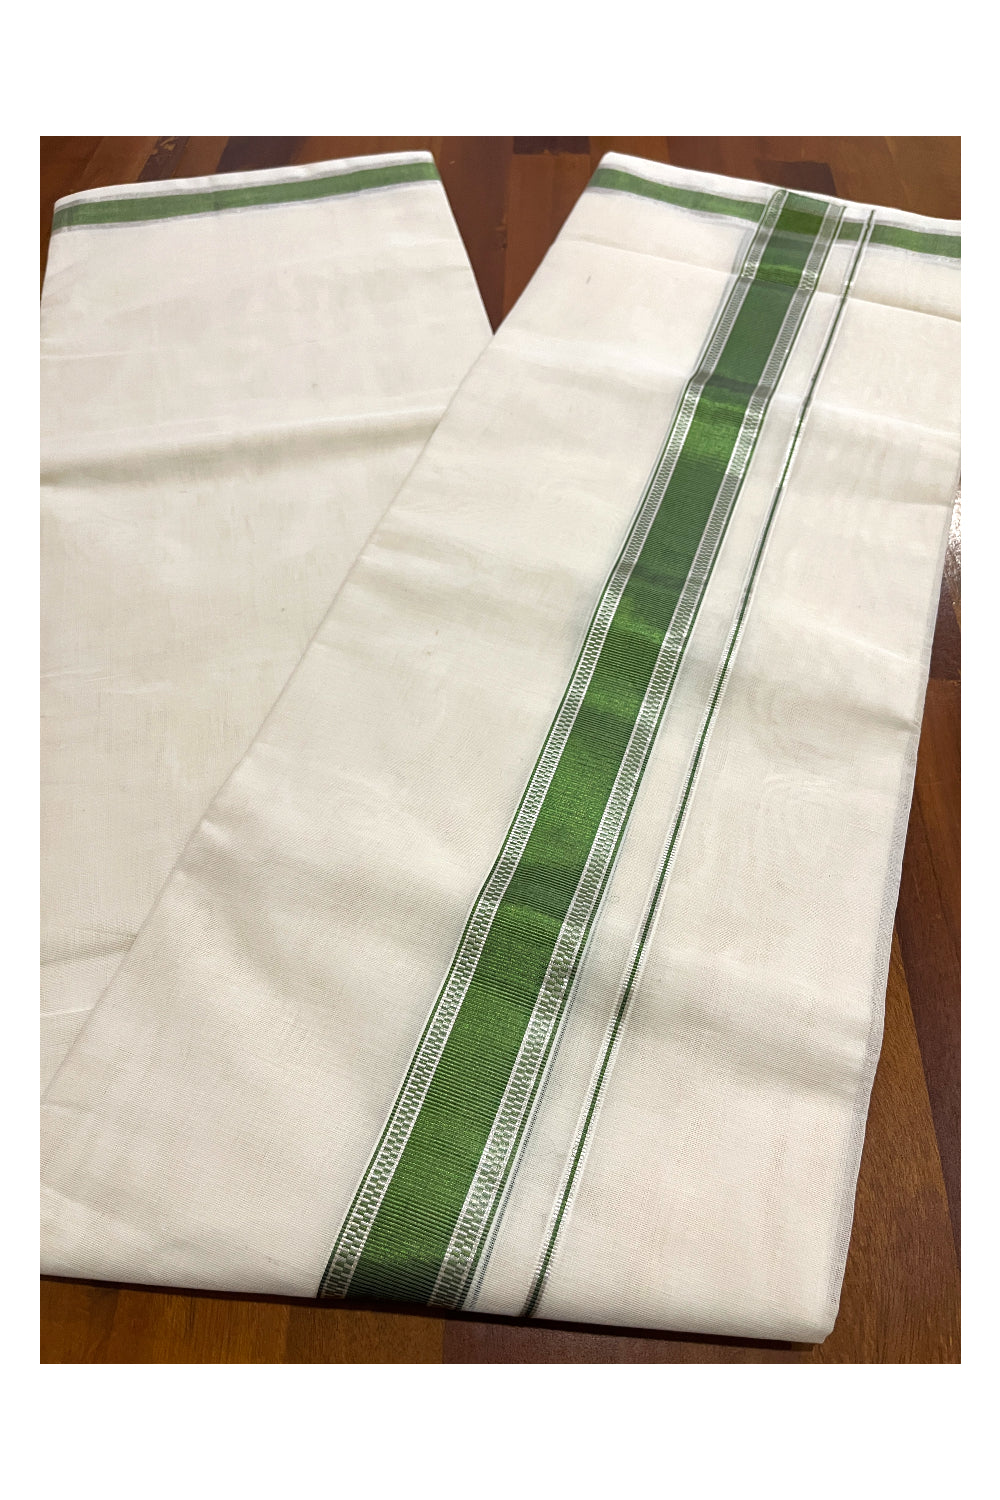 Southloom Premium Handloom Cotton Double Mundu with Silver and Green Kasavu Design Border (South Indian Kerala Dhoti)